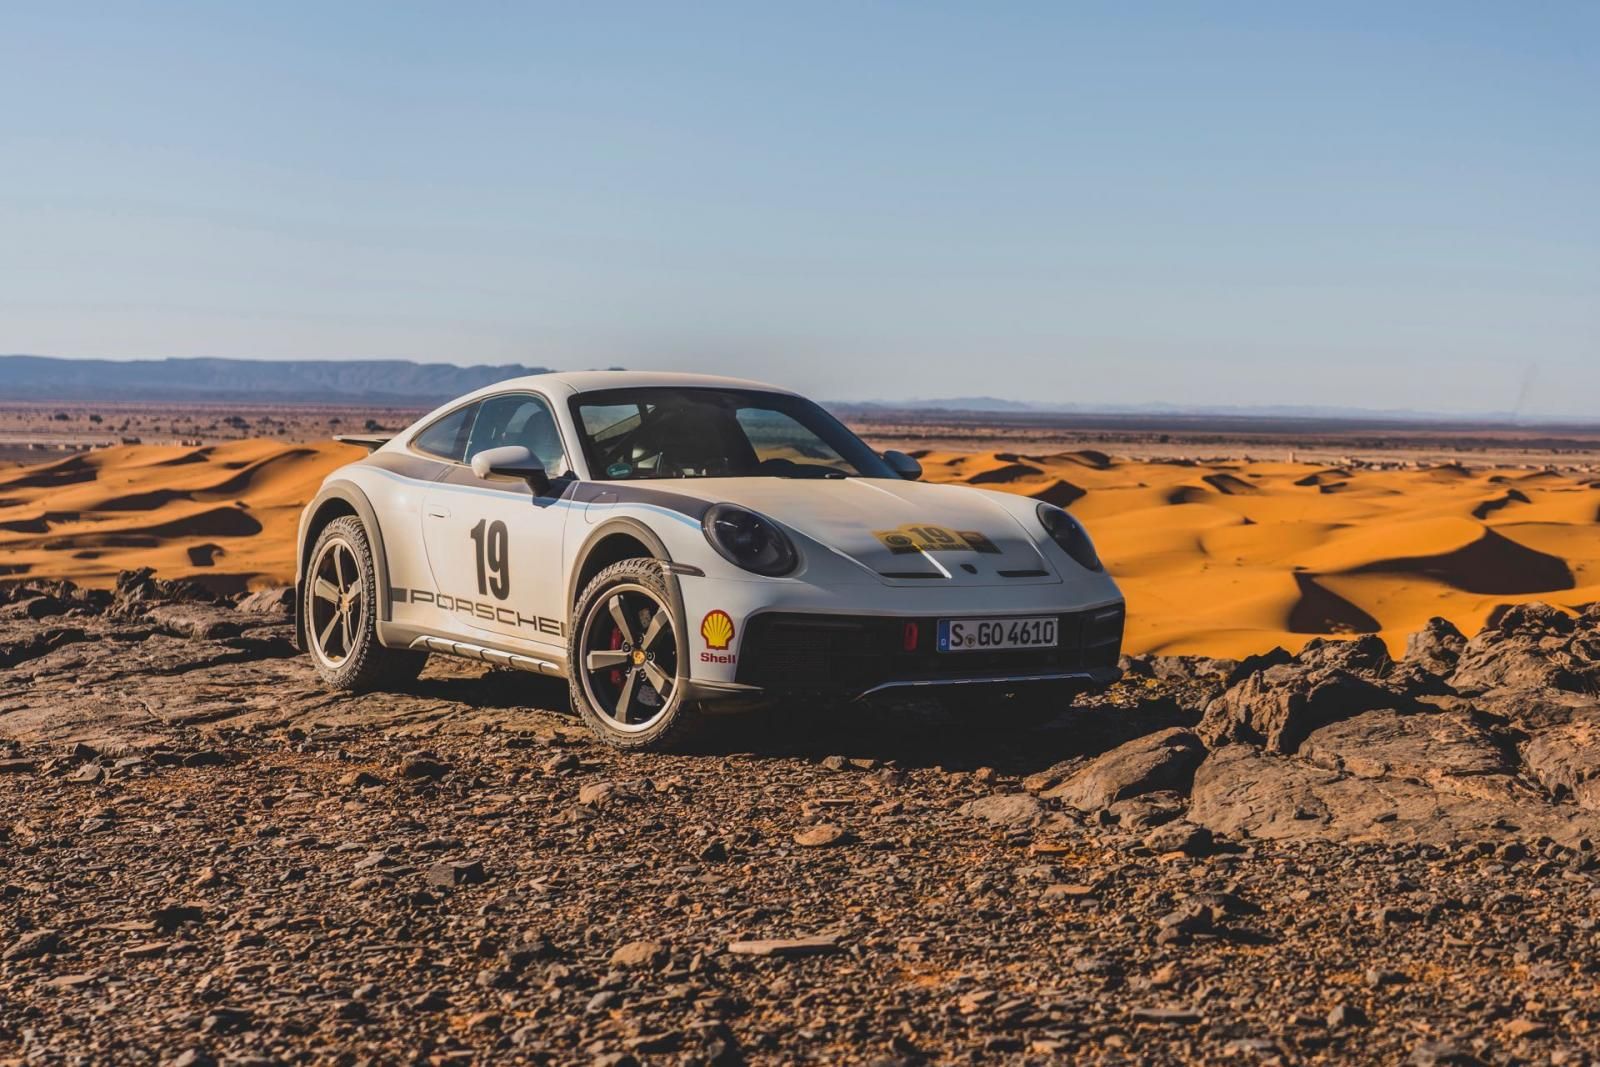 Porsche 911 Dakar Historic decorative wraps pellicole decorative rally